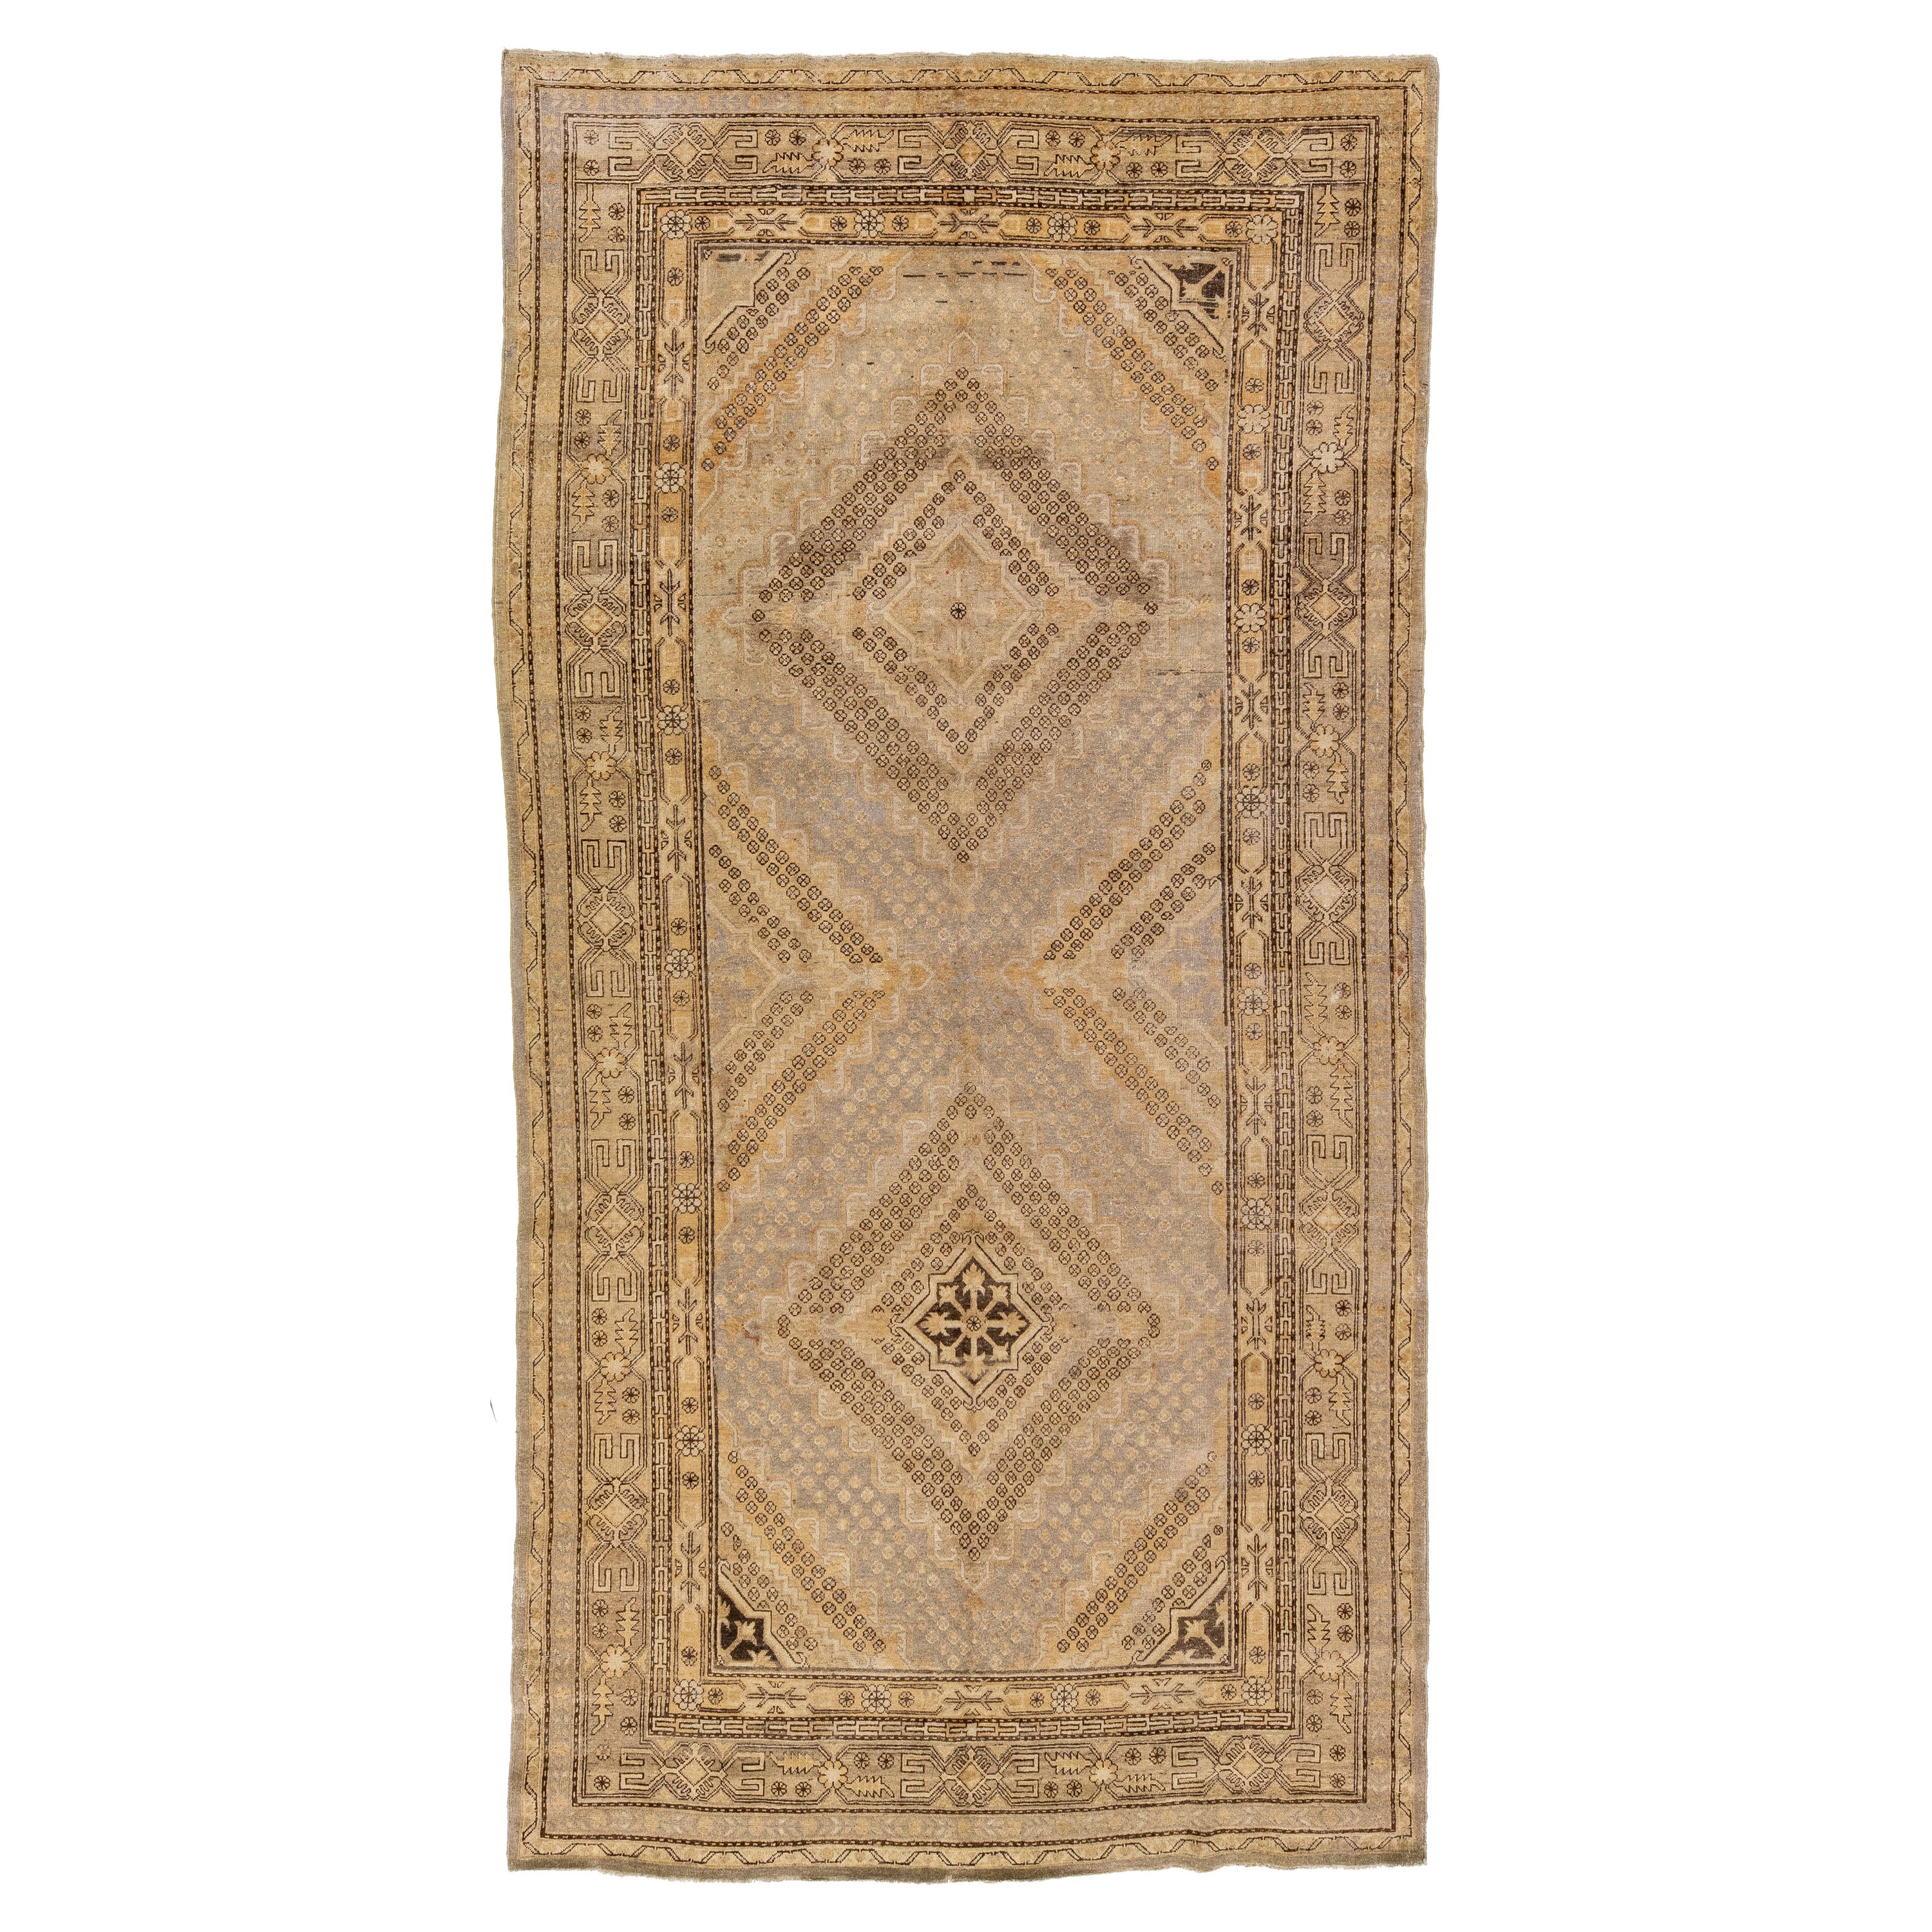 Antique Samarkand Handmade Tan & Gray Wool Rug Tribal Motif For Sale